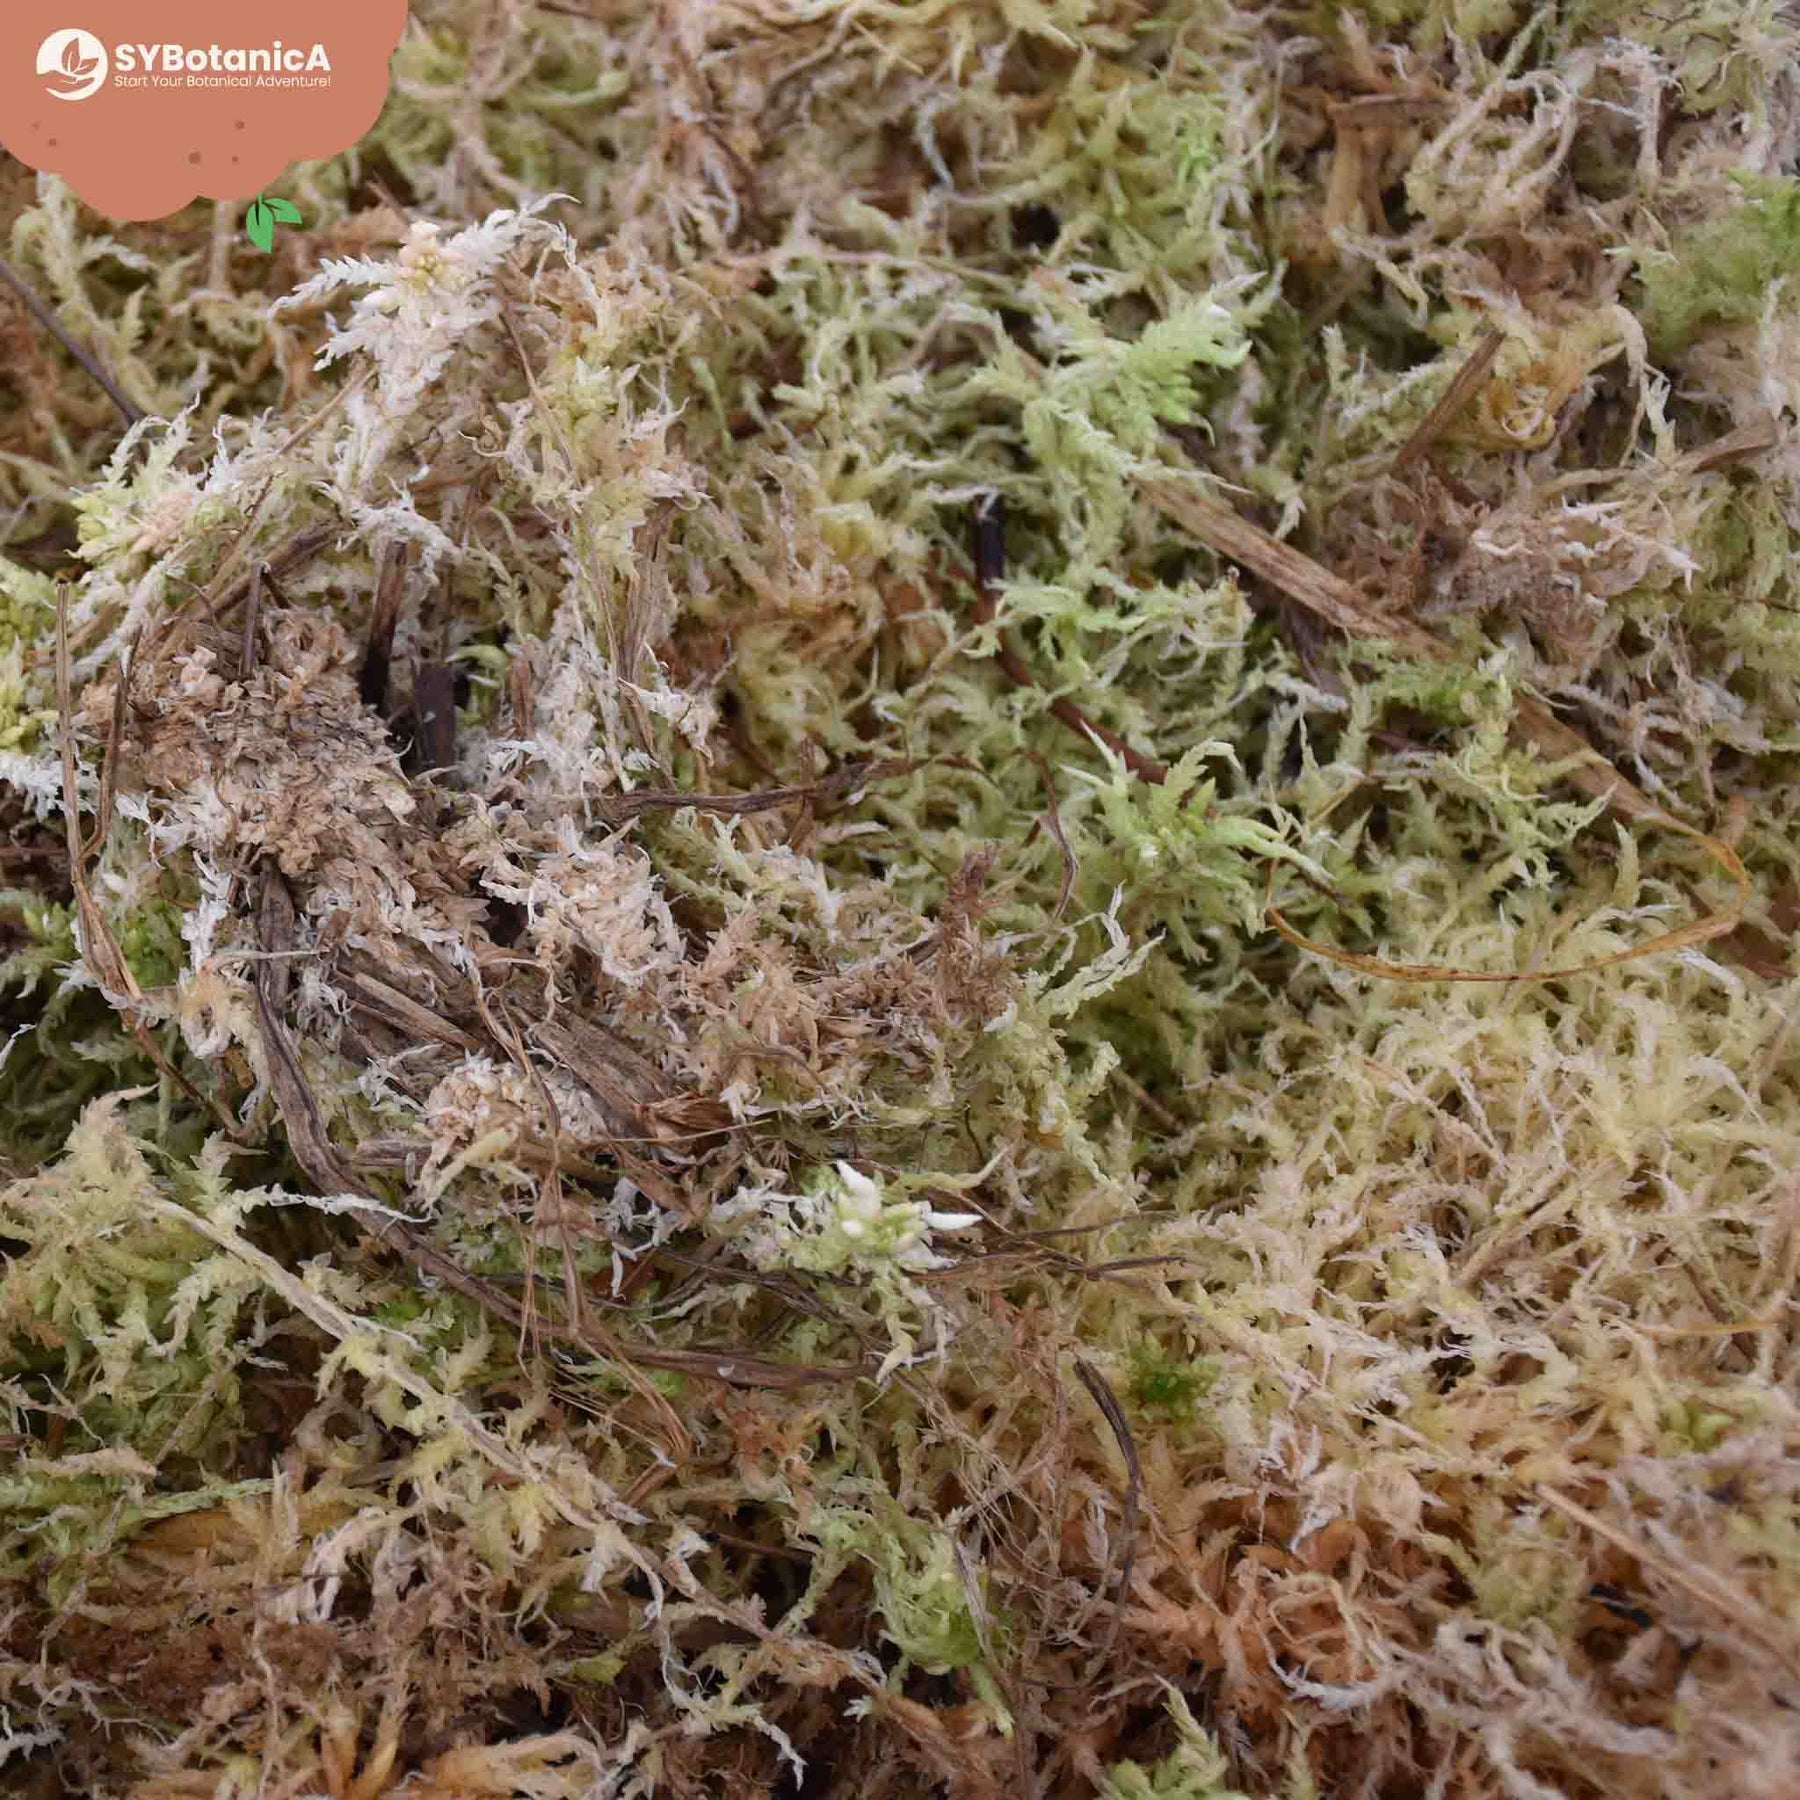 Sphagnum moss, 3L-36L, SYBASoil, Peat moss